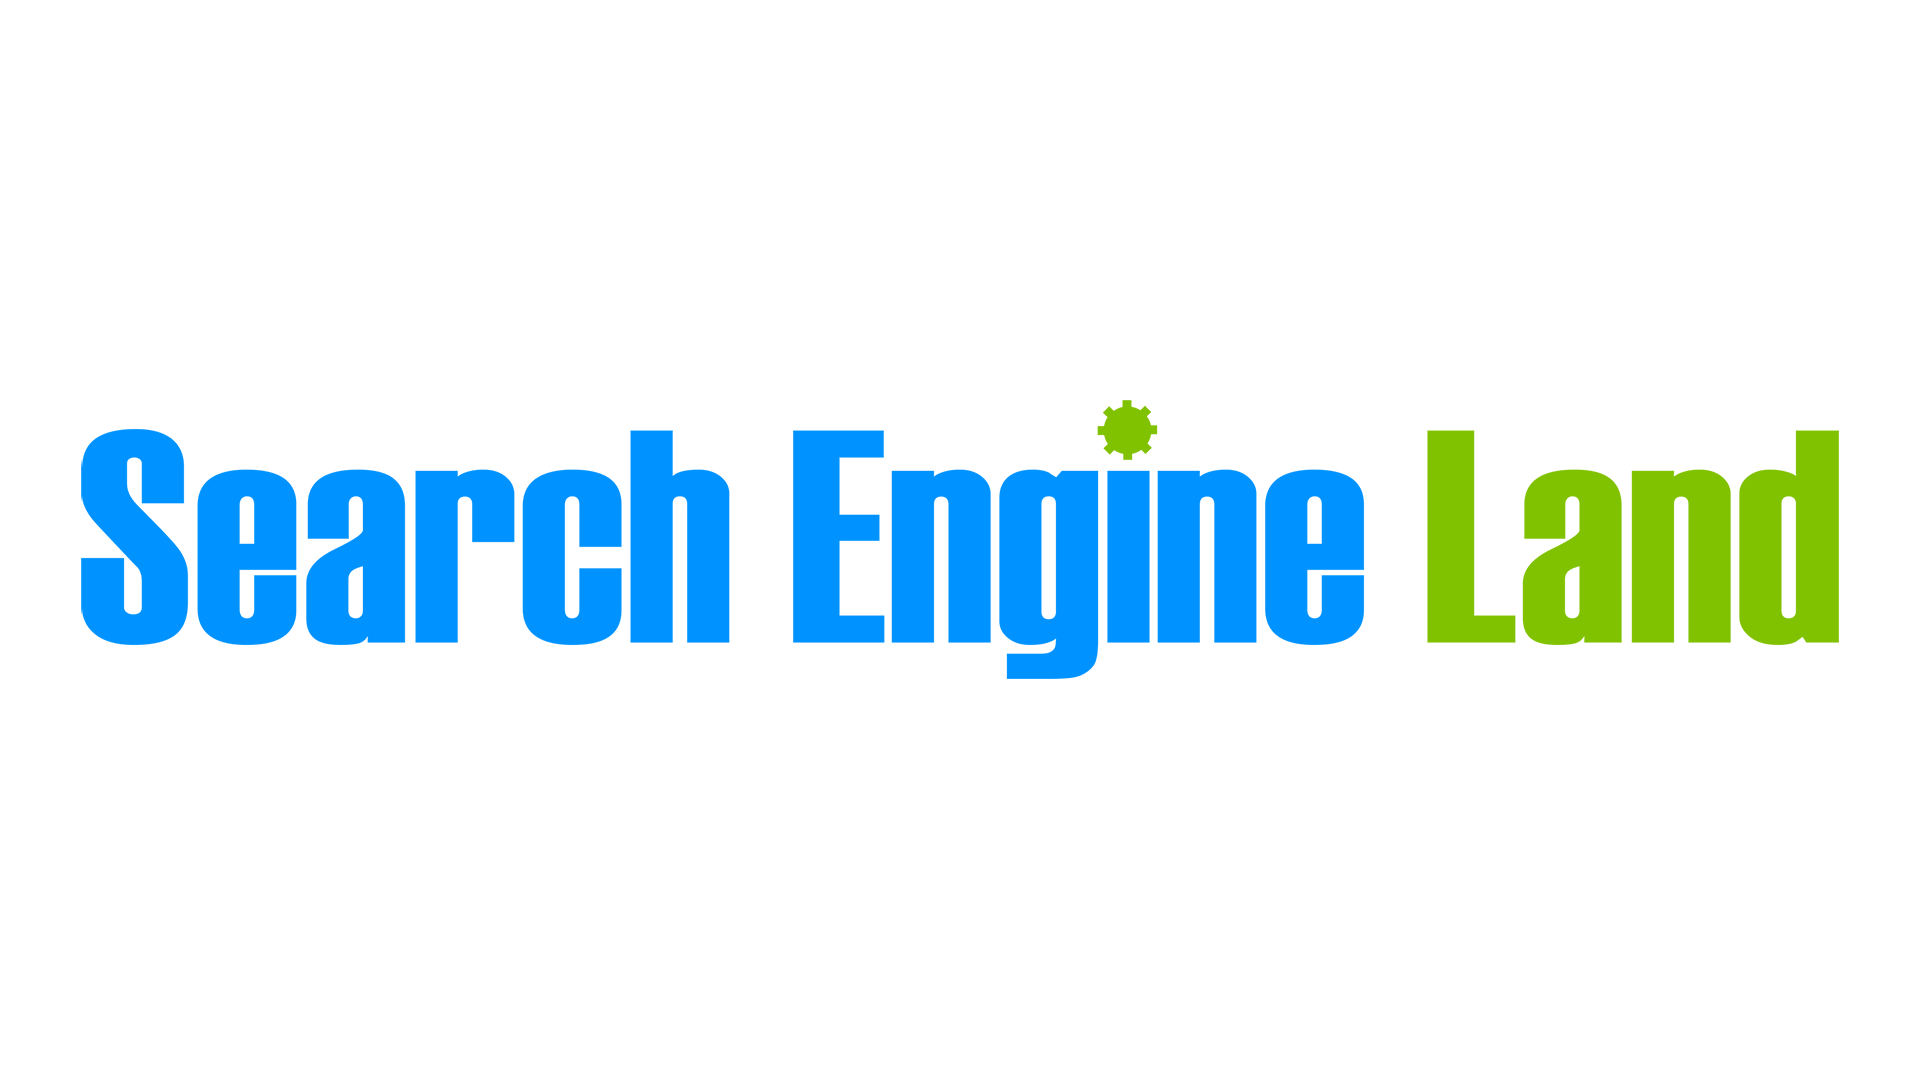 Bing Browser Logo - Search Engine Land - News On Search Engines, Search Engine ...